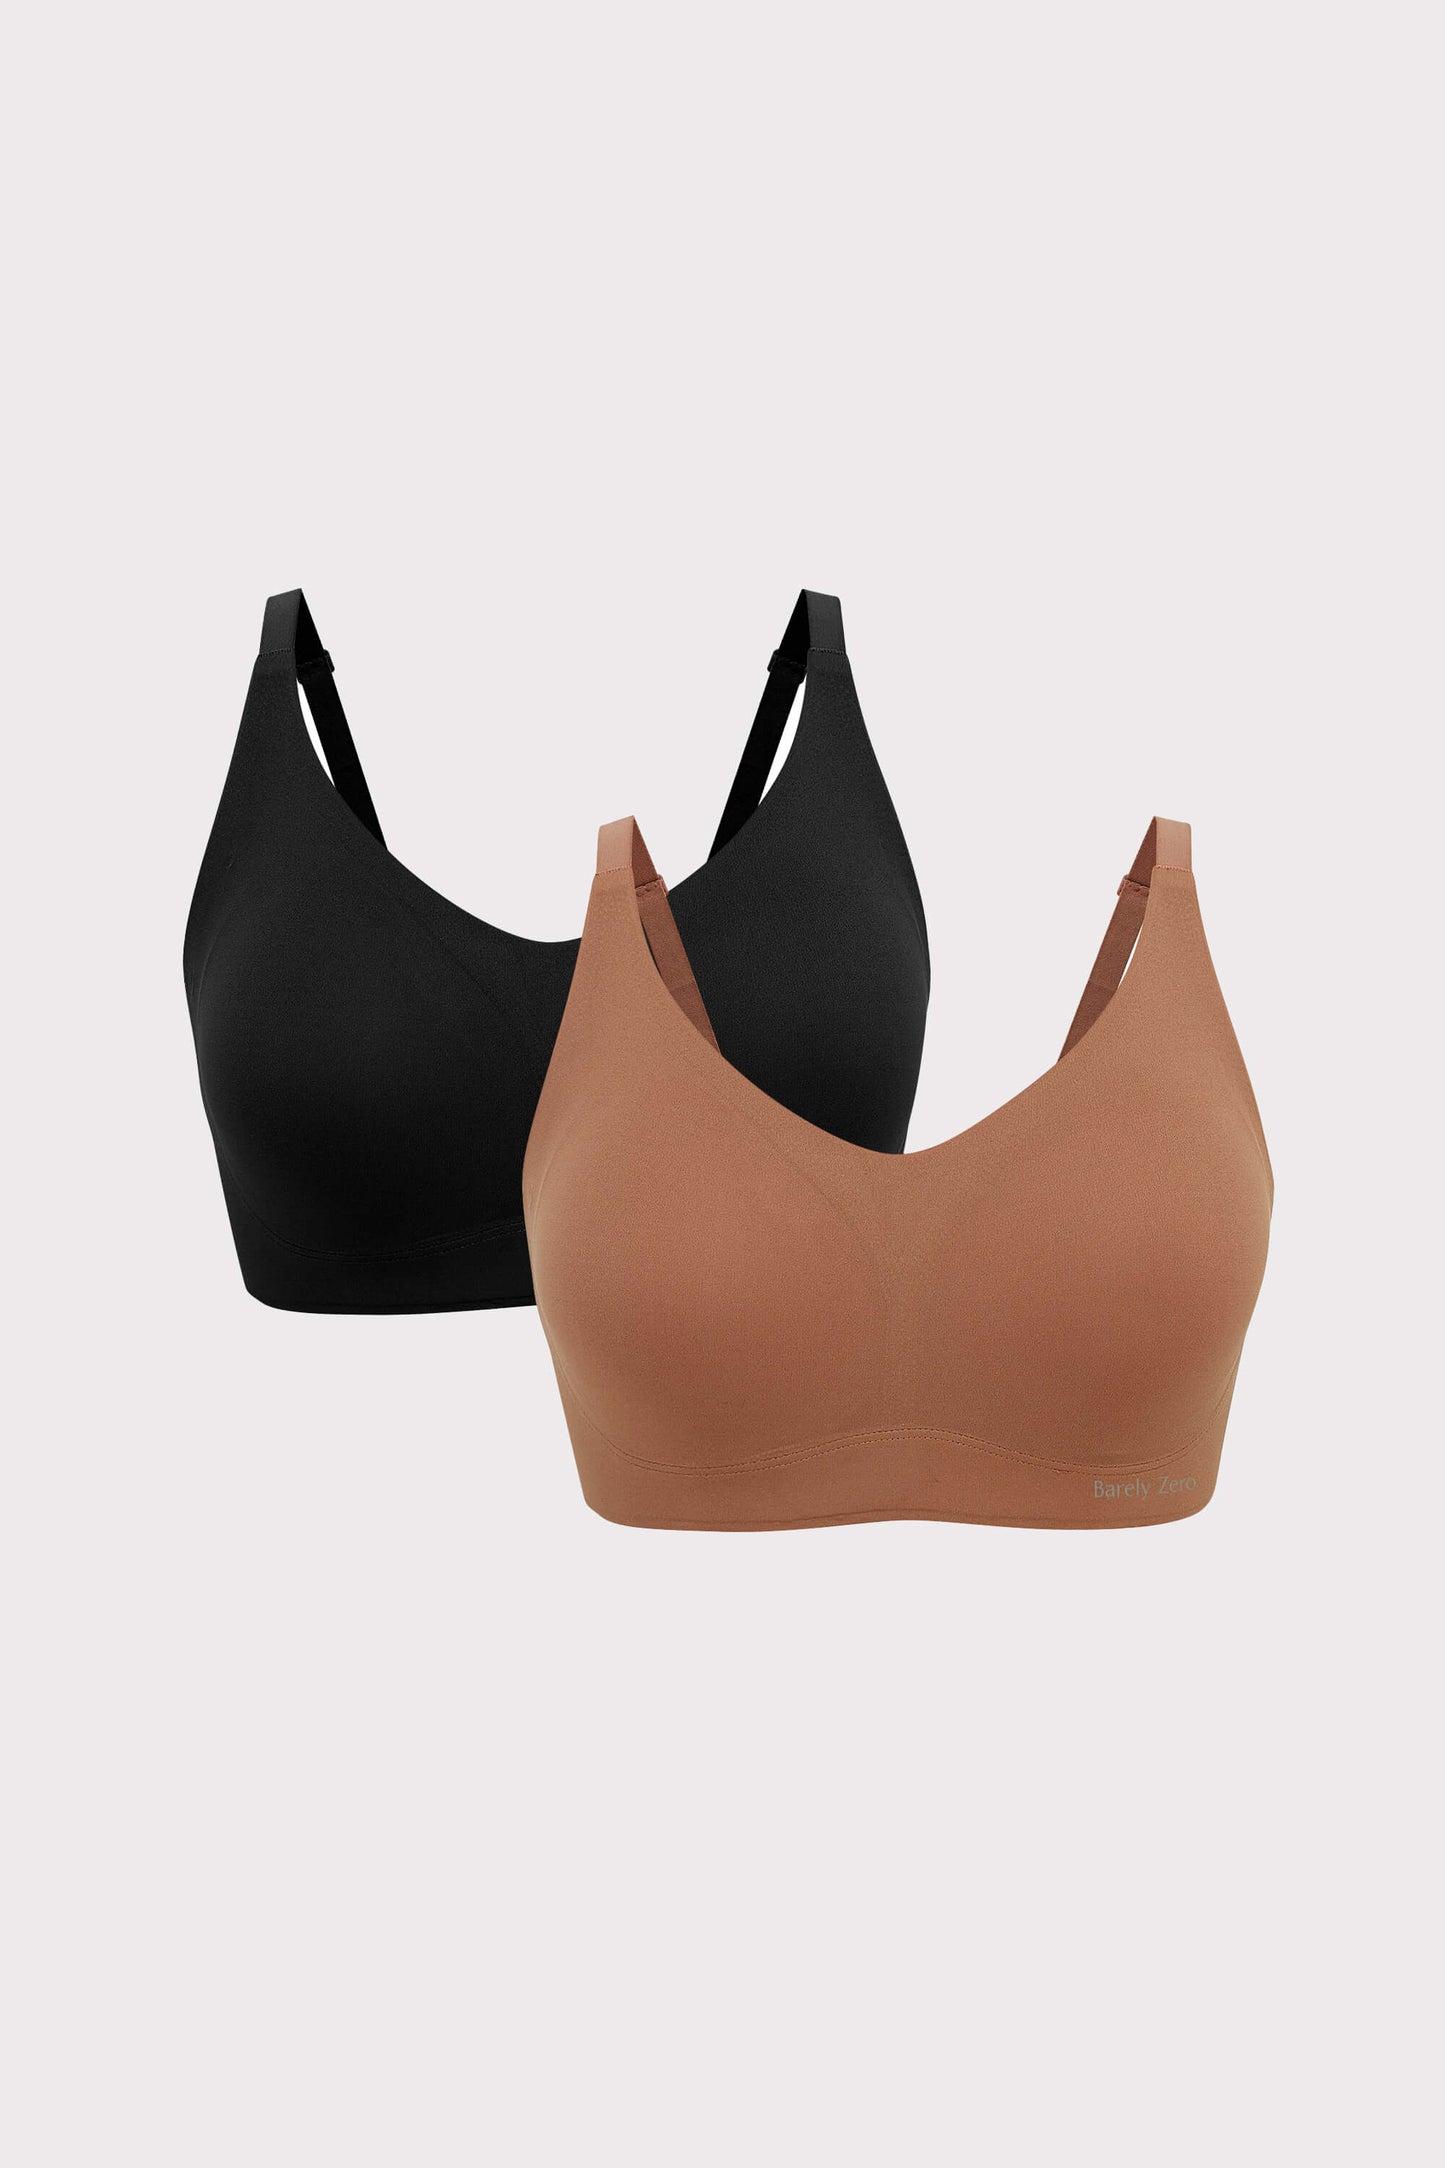 one black bra and one brick color bra